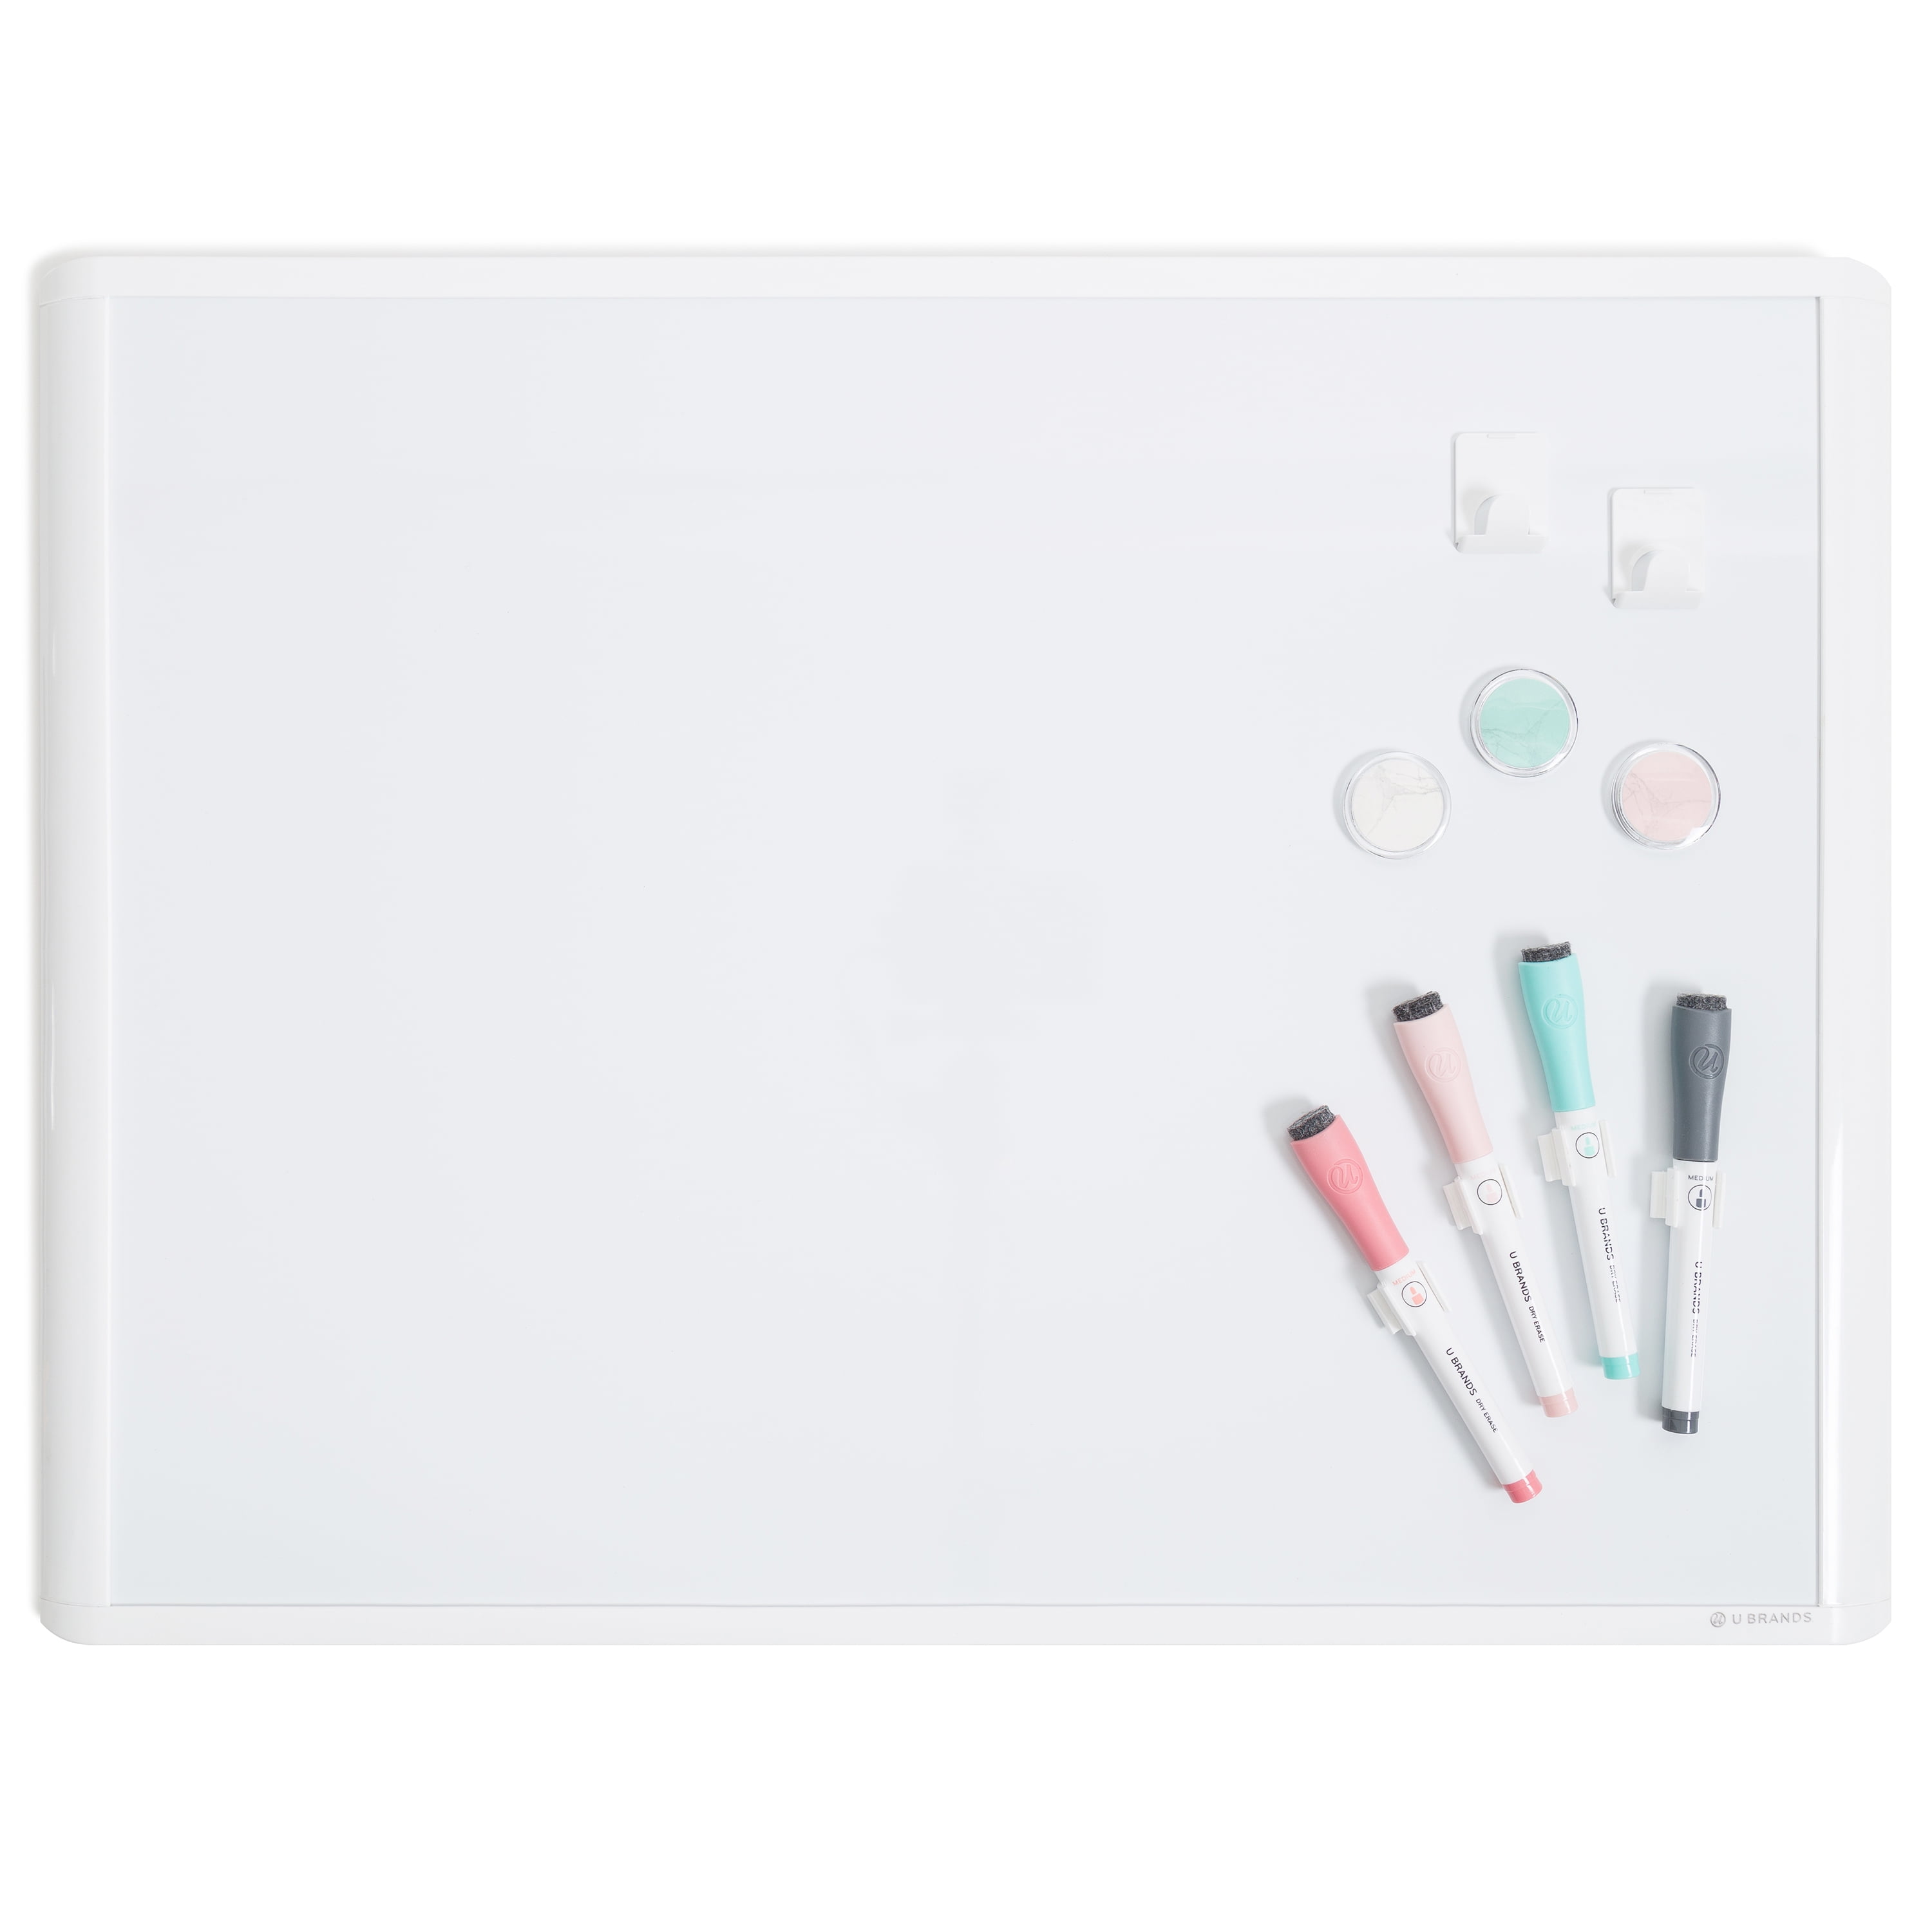 U Brands Dry Erase Whiteboard Value Pack, 17" x 23", Assorted Dry Erase Markers, 4595U